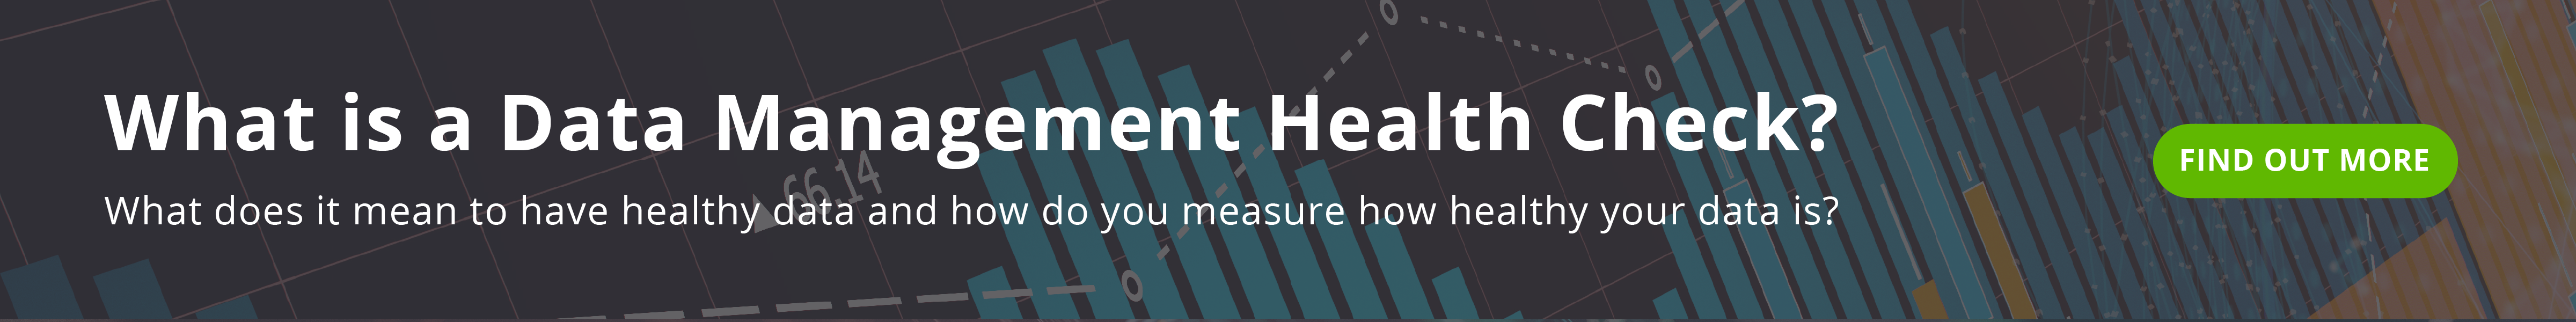 data-management-health-check@4x